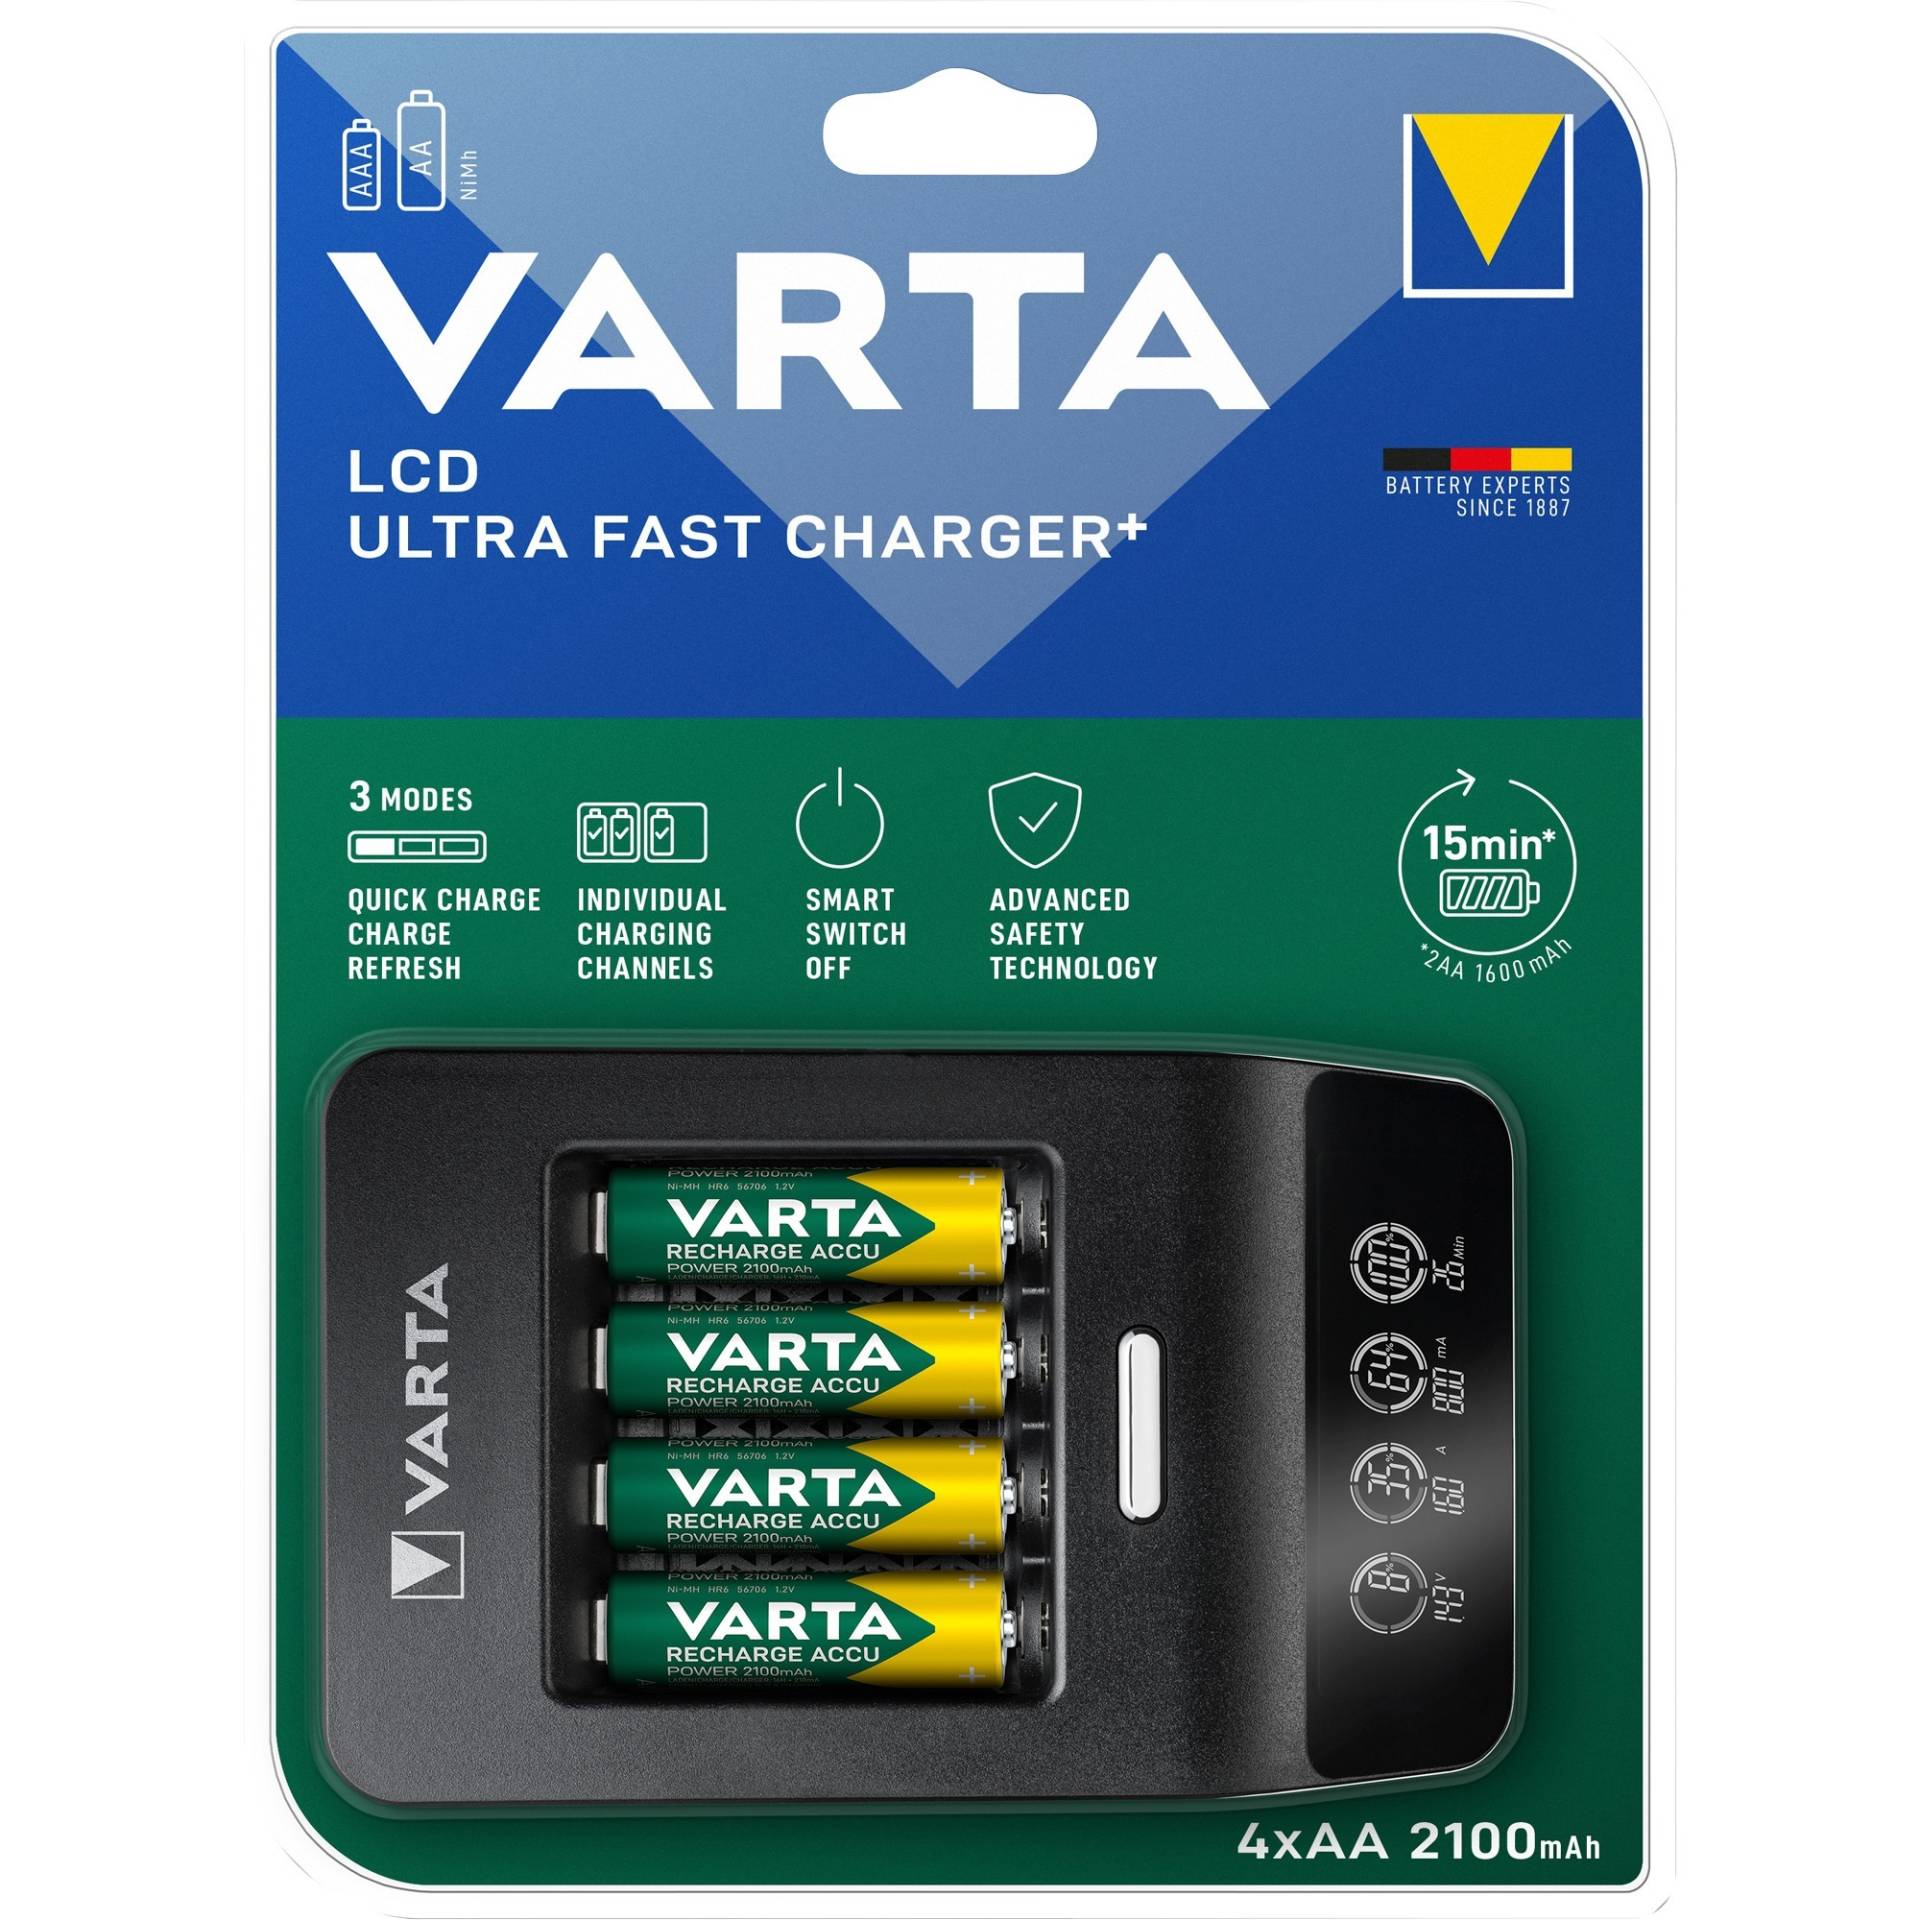 LCD Ultra Fast Charger+, Ladegerät von Varta